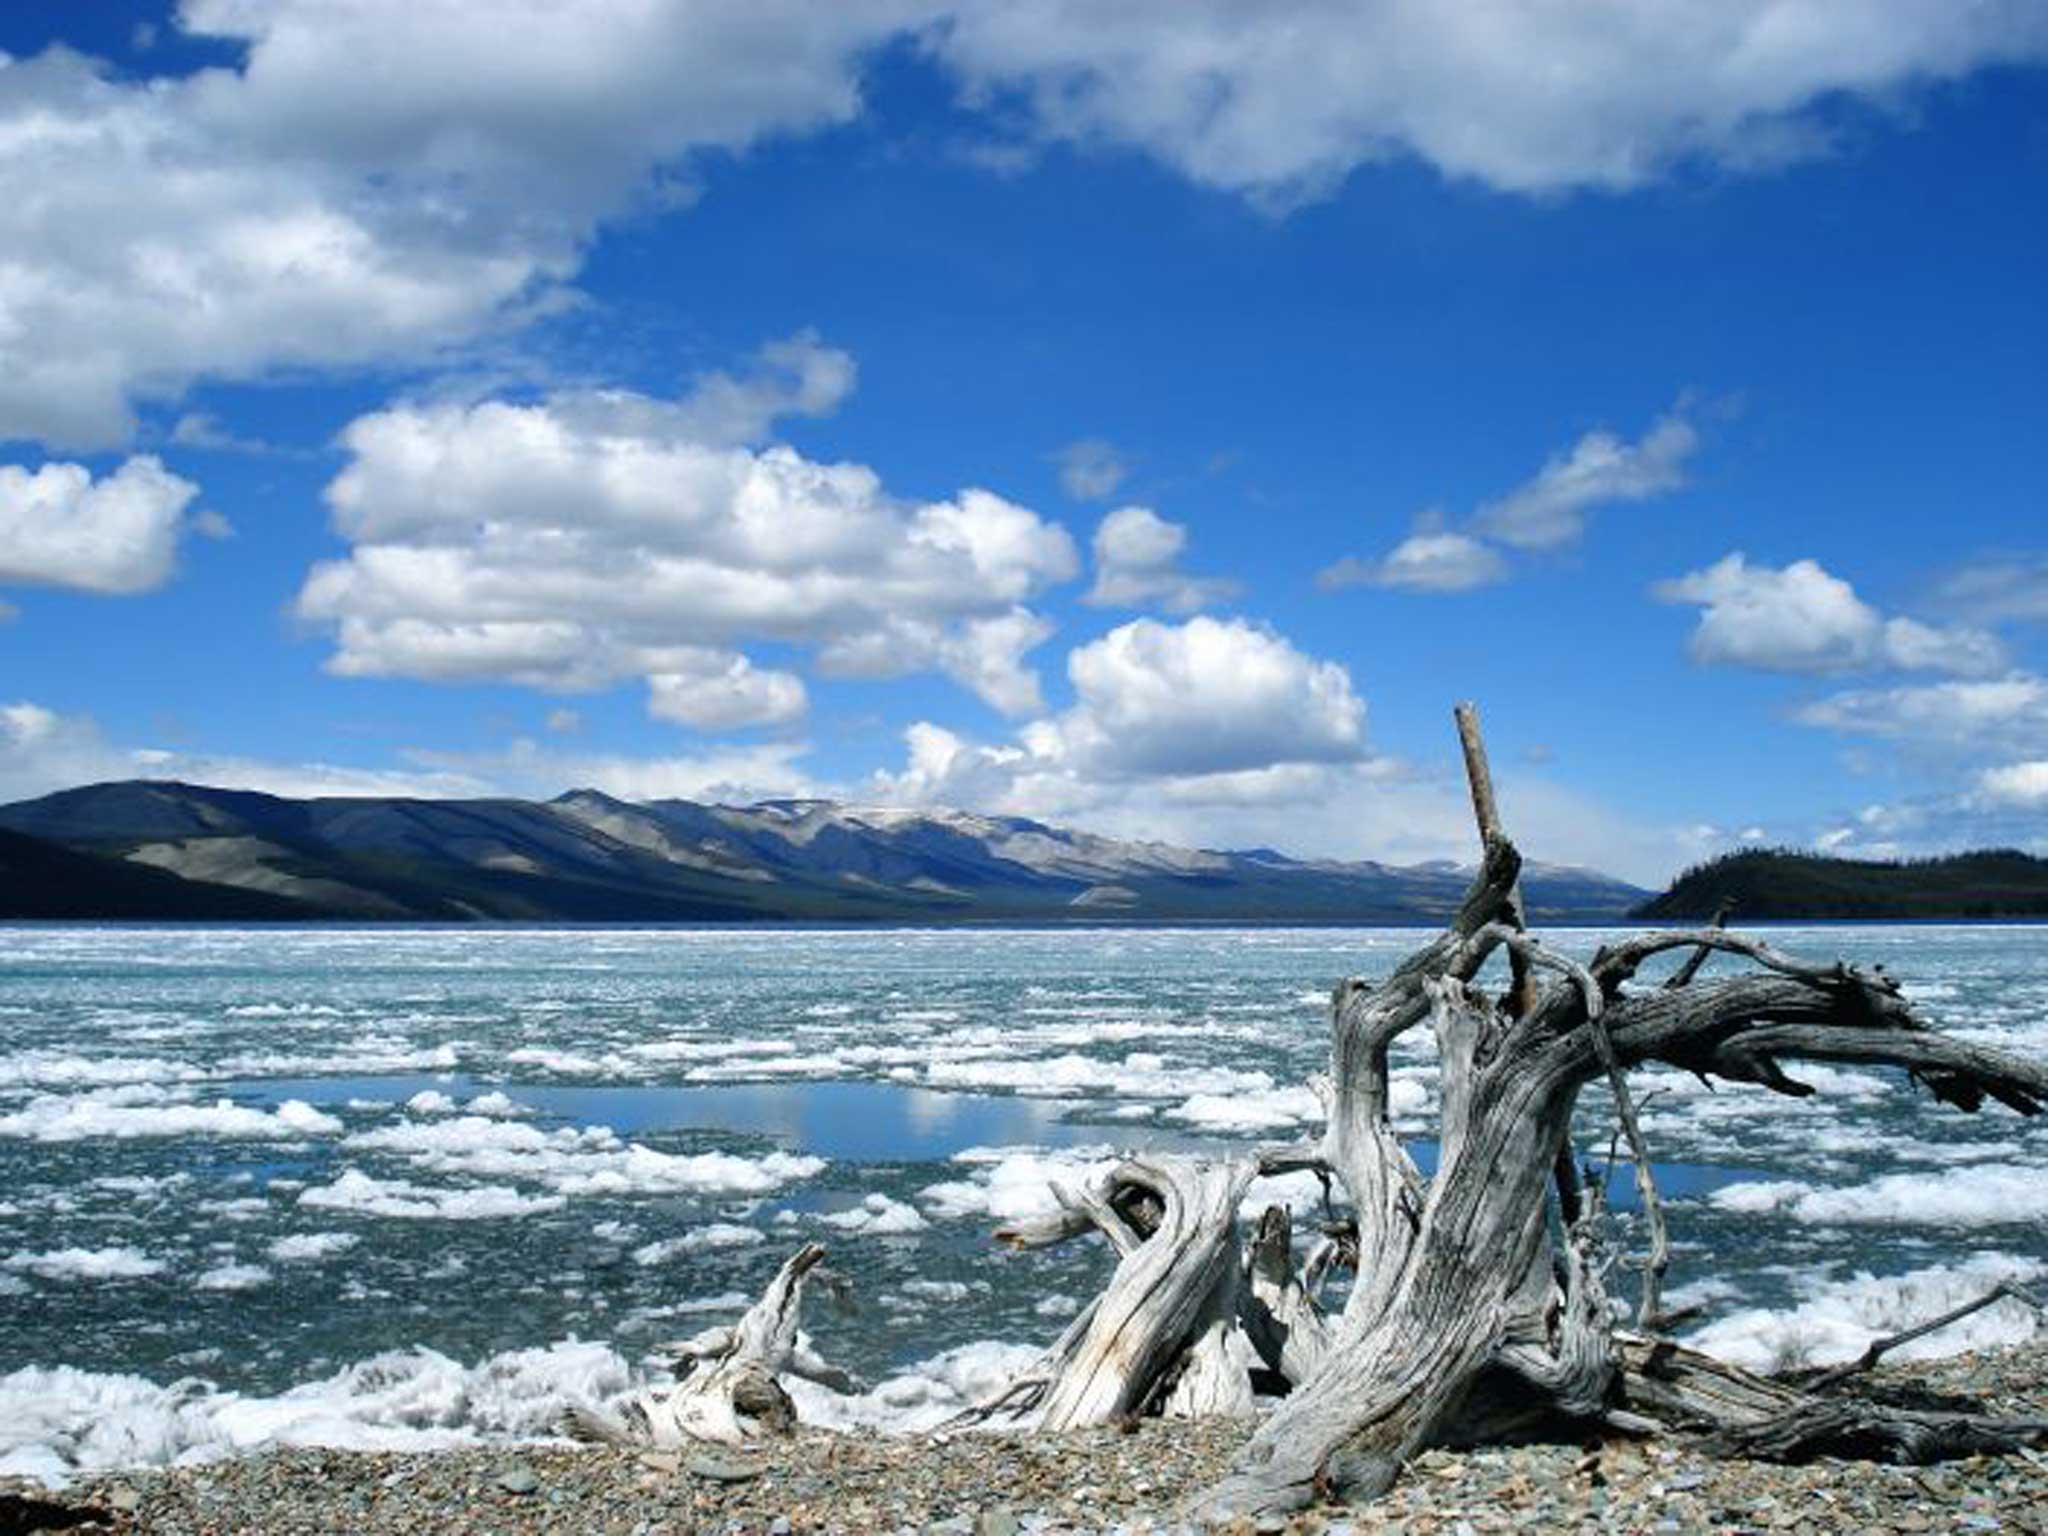 Take it slow: Ed's travels took him to Khovsgul Lake in Mongolia